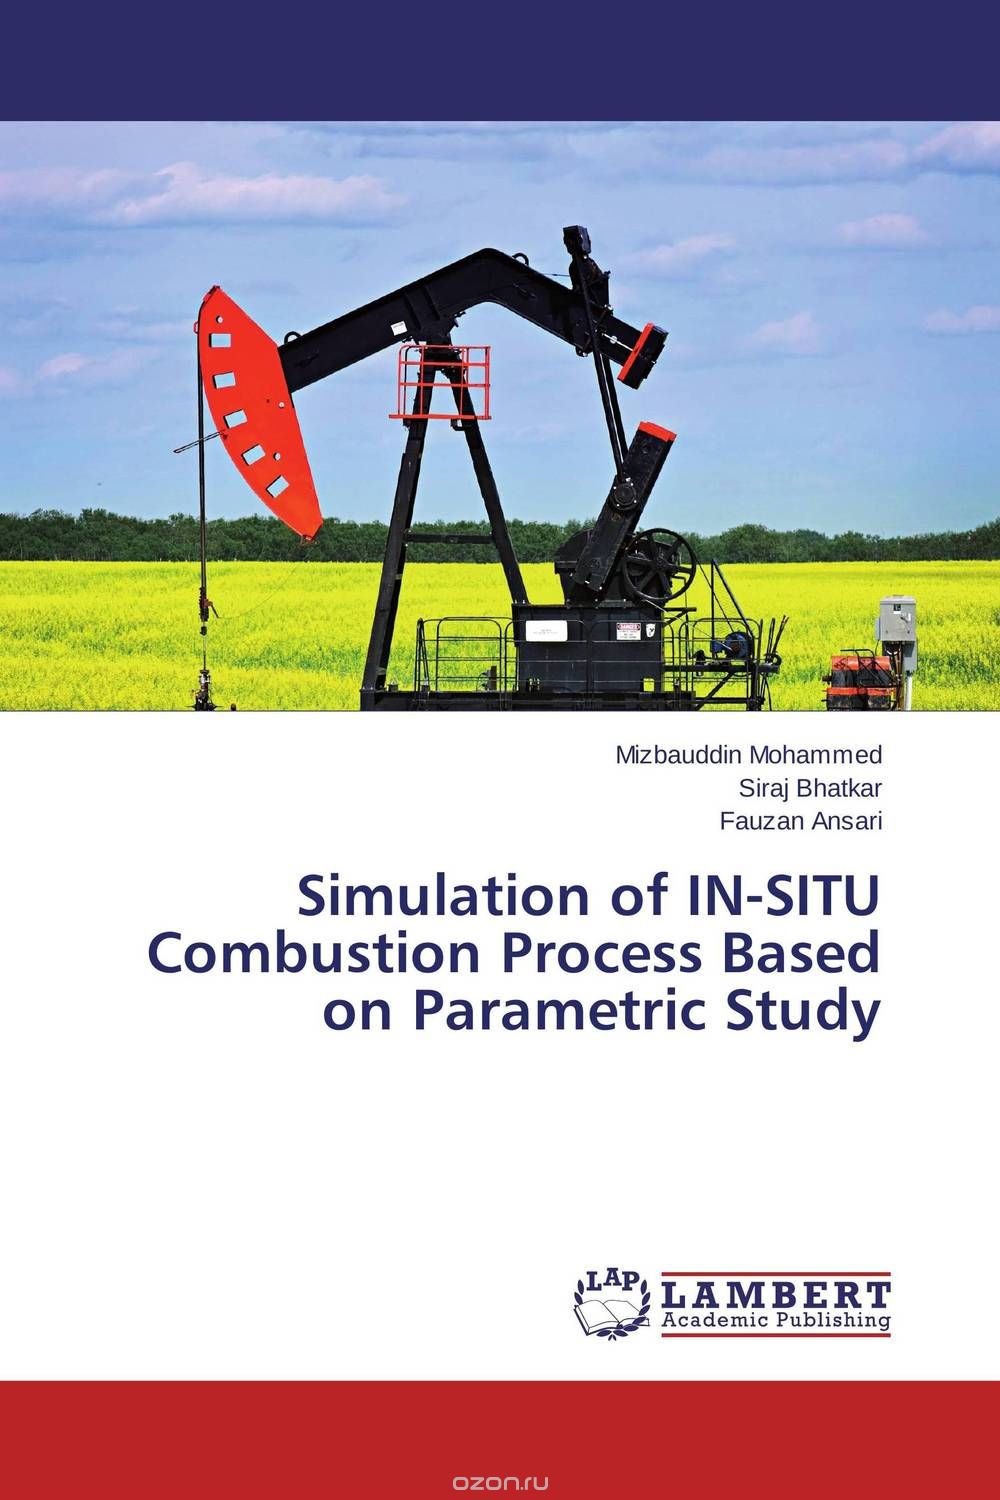 Скачать книгу "Simulation of IN-SITU Combustion Process Based on Parametric Study"